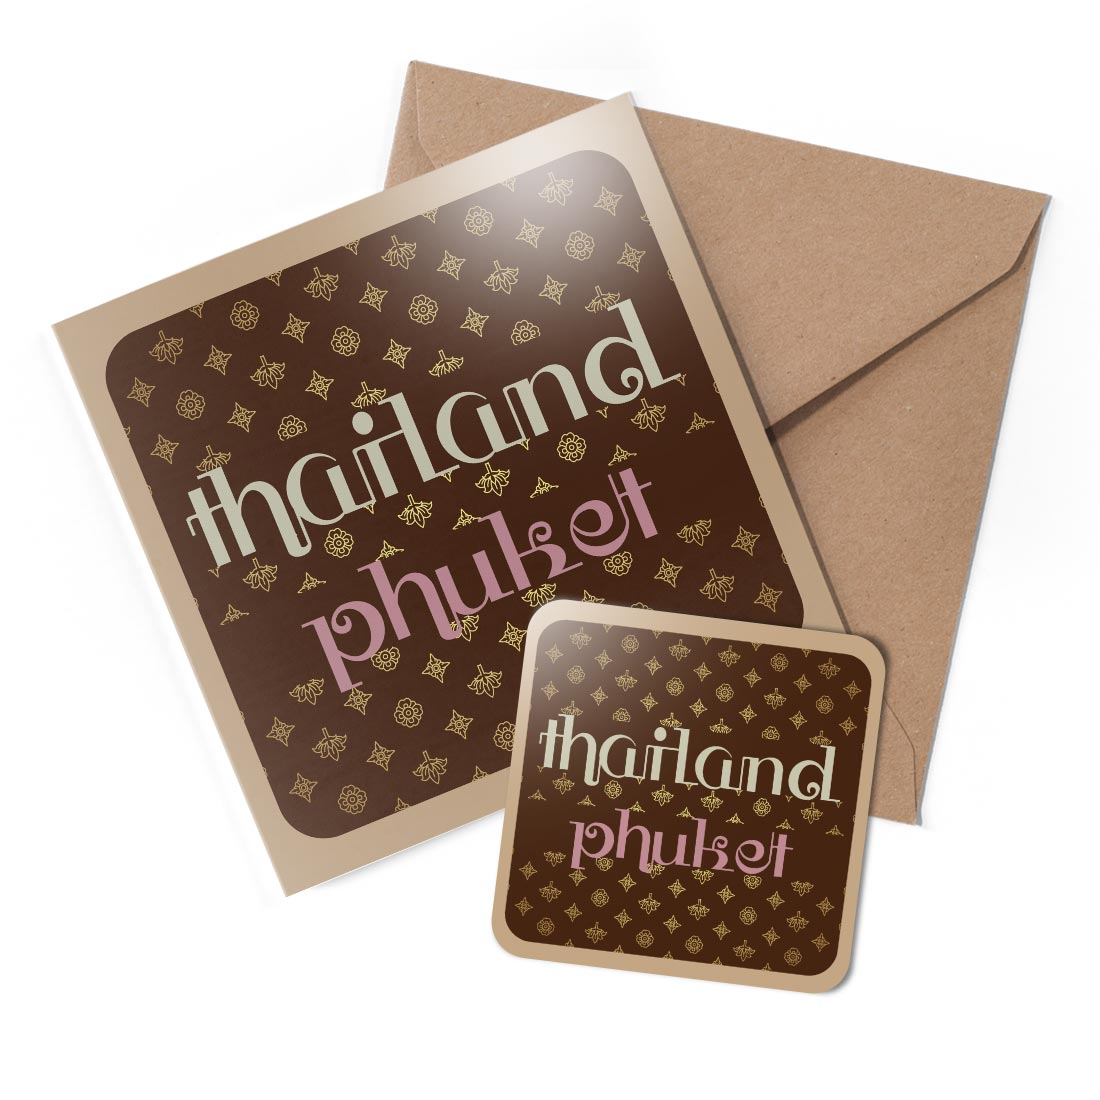 1 x Greeting Card & Coaster Set - Phuket Thailand Tribal Pattern #60448